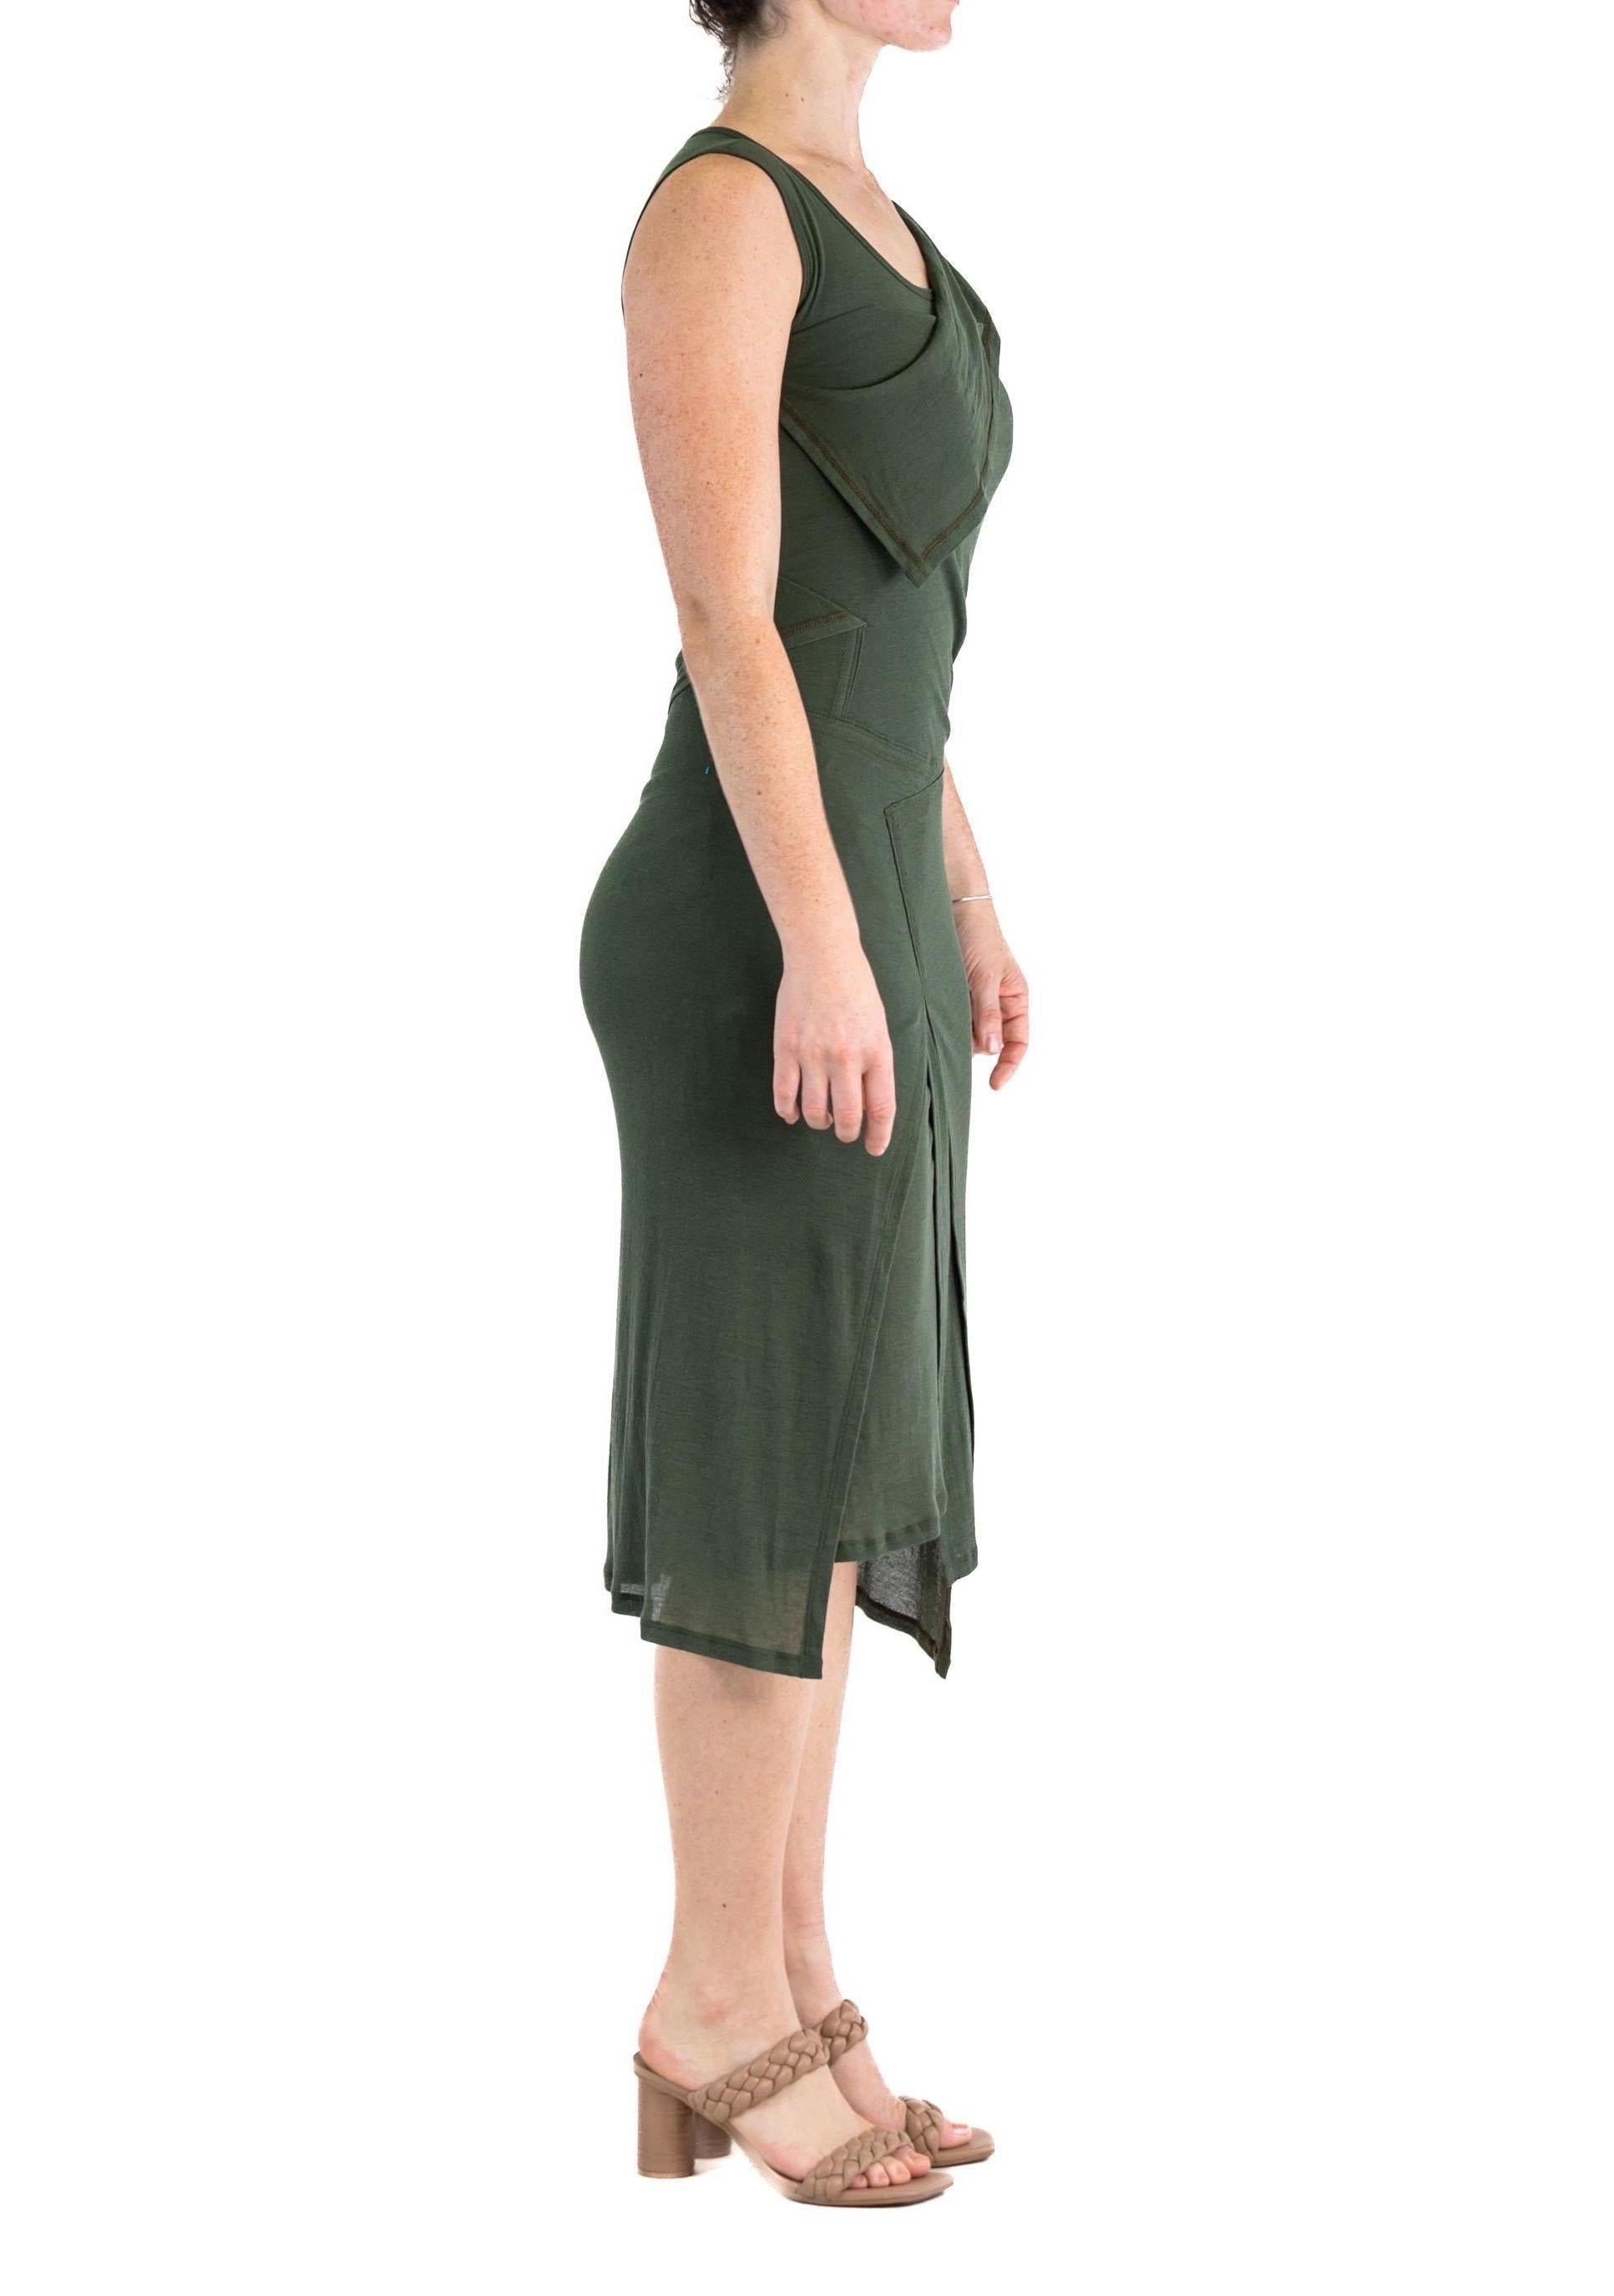 2000S ISSEY MIYAKE Olive Green Rayon Knit Asymmetrically Draped Dress 1